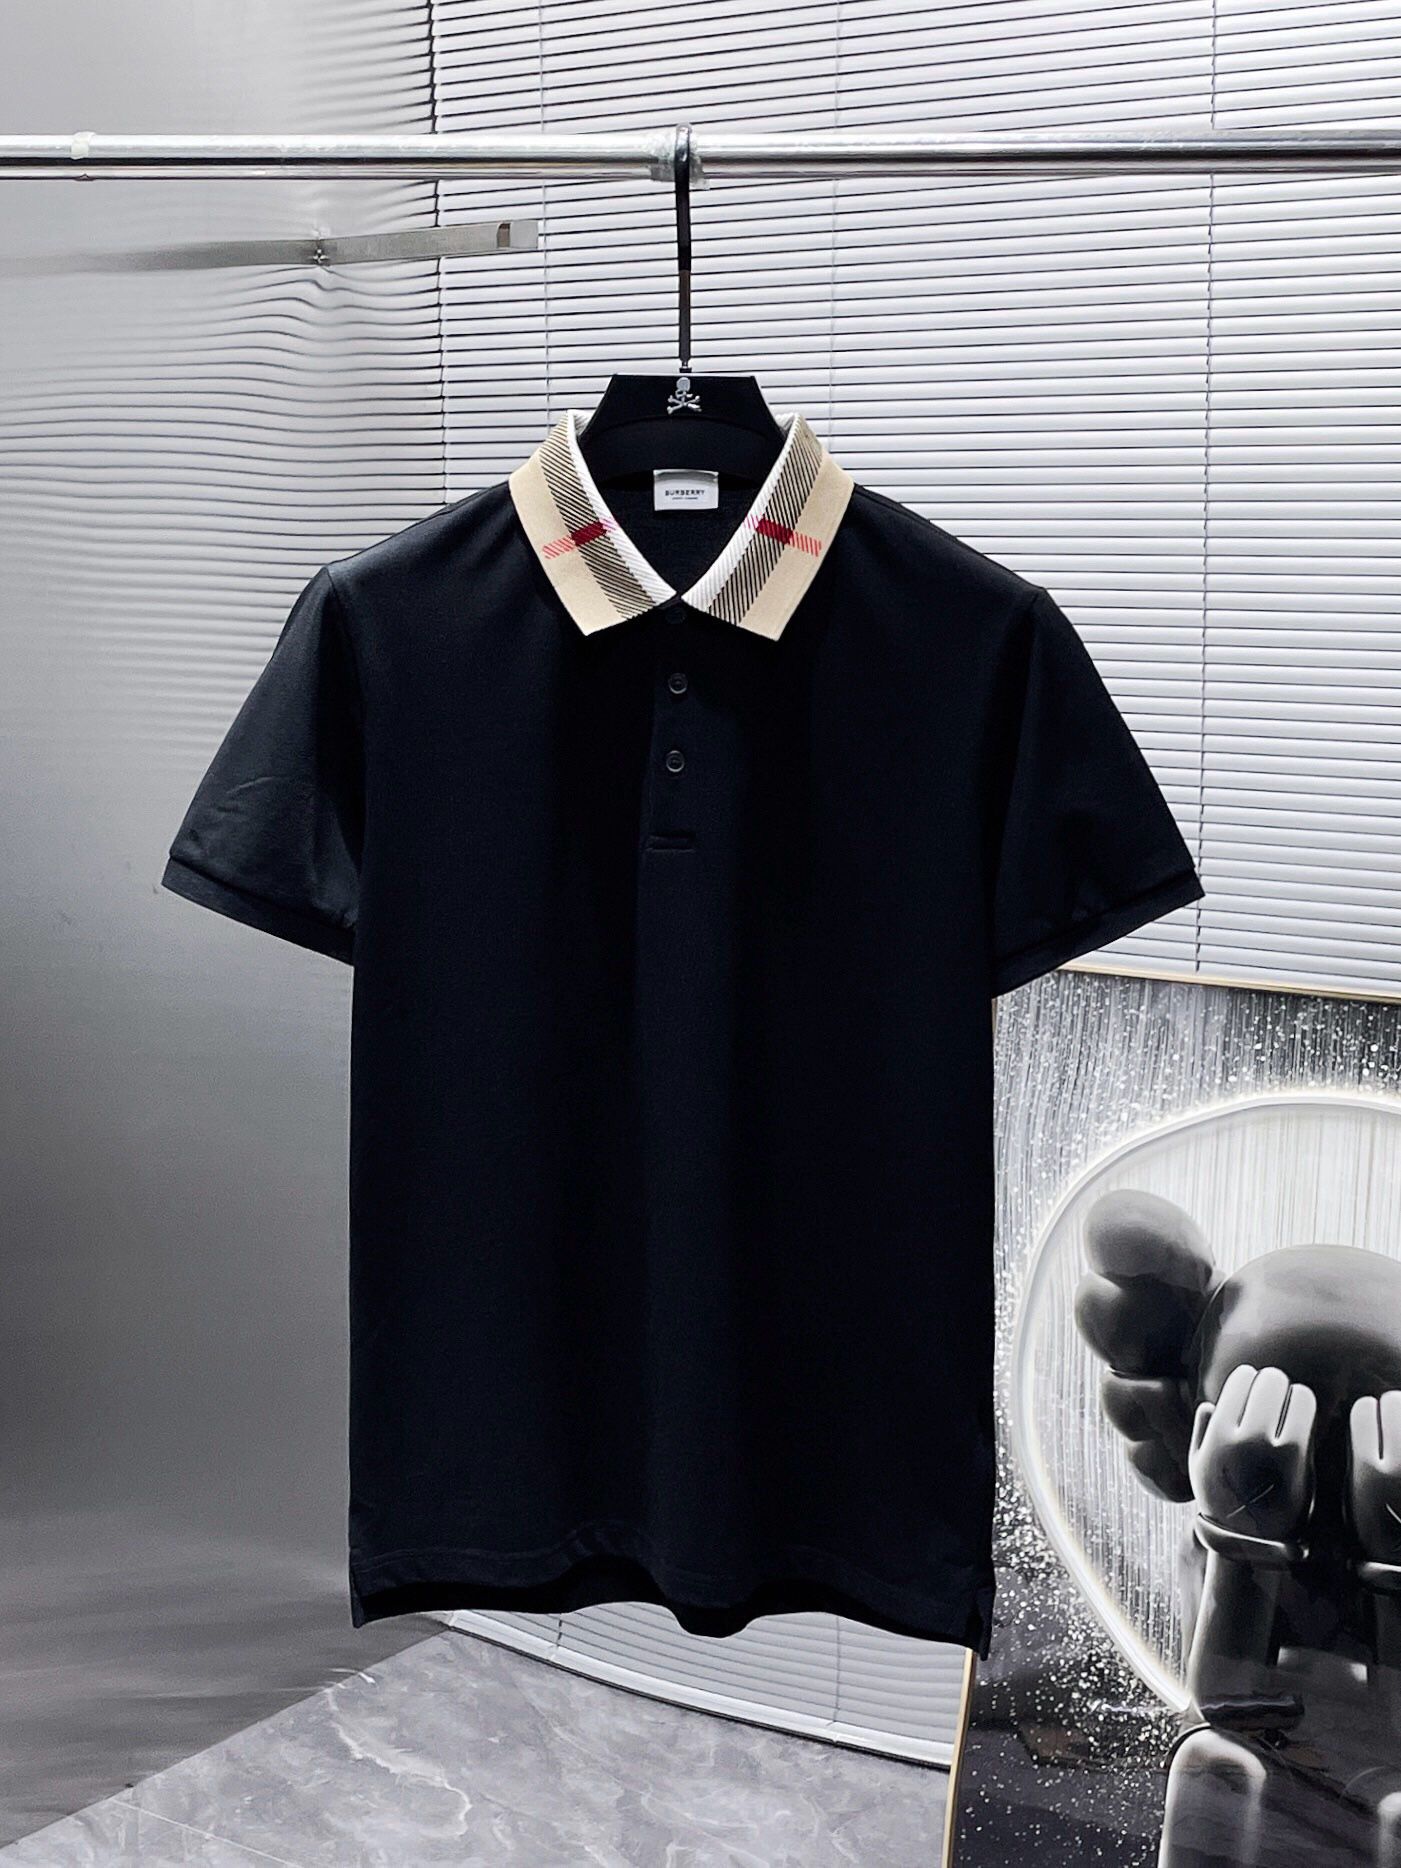 Burberry Men’s Polo Shirt New 